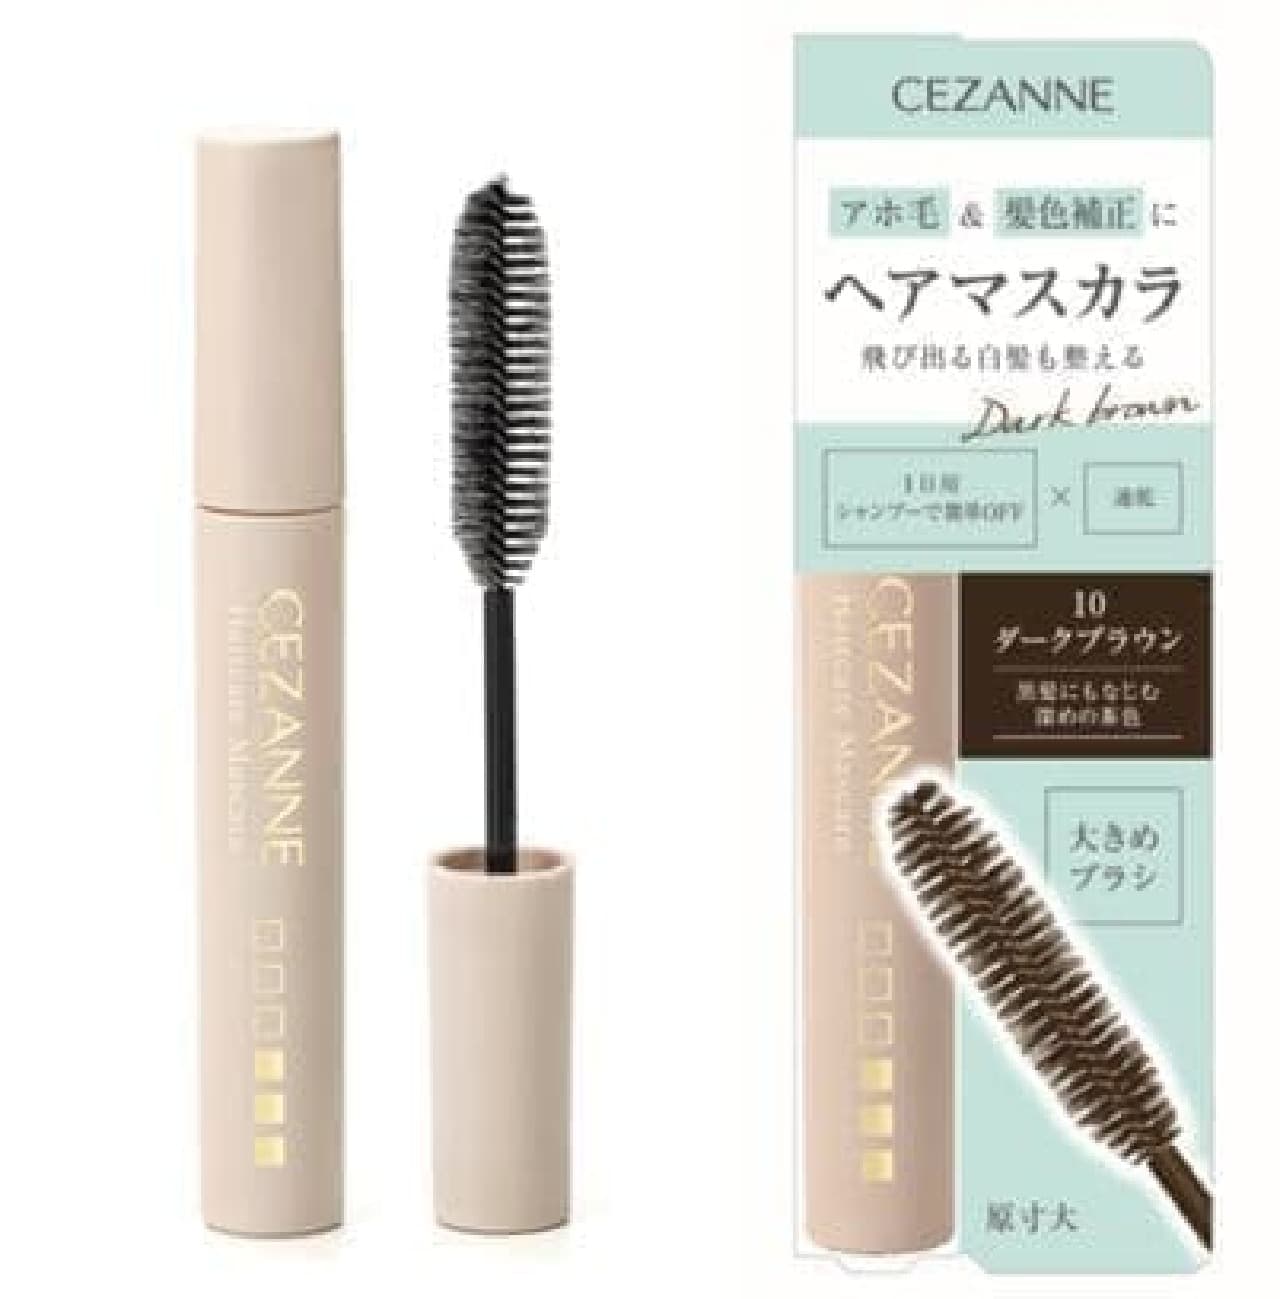 Cezanne Cosmetics "Hair Care Mascara 10 Dark Brown"